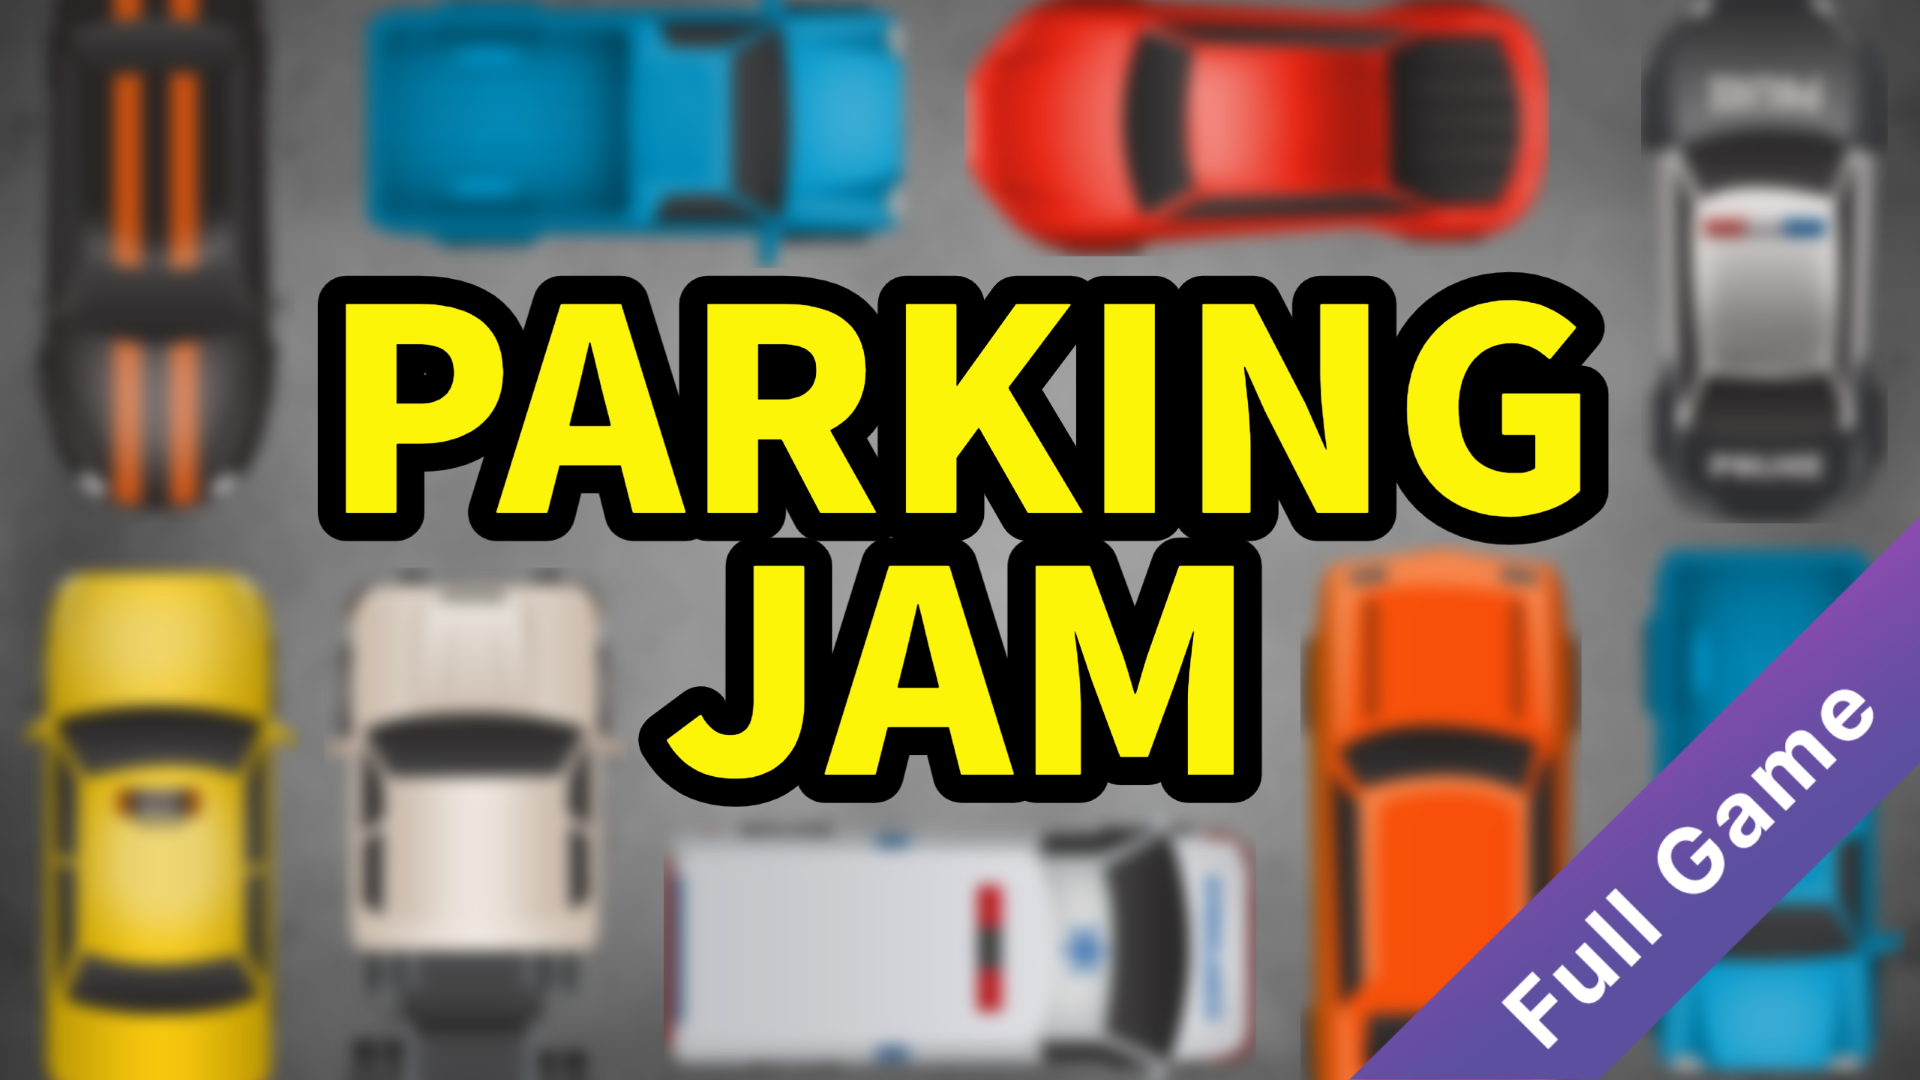 Parking jam